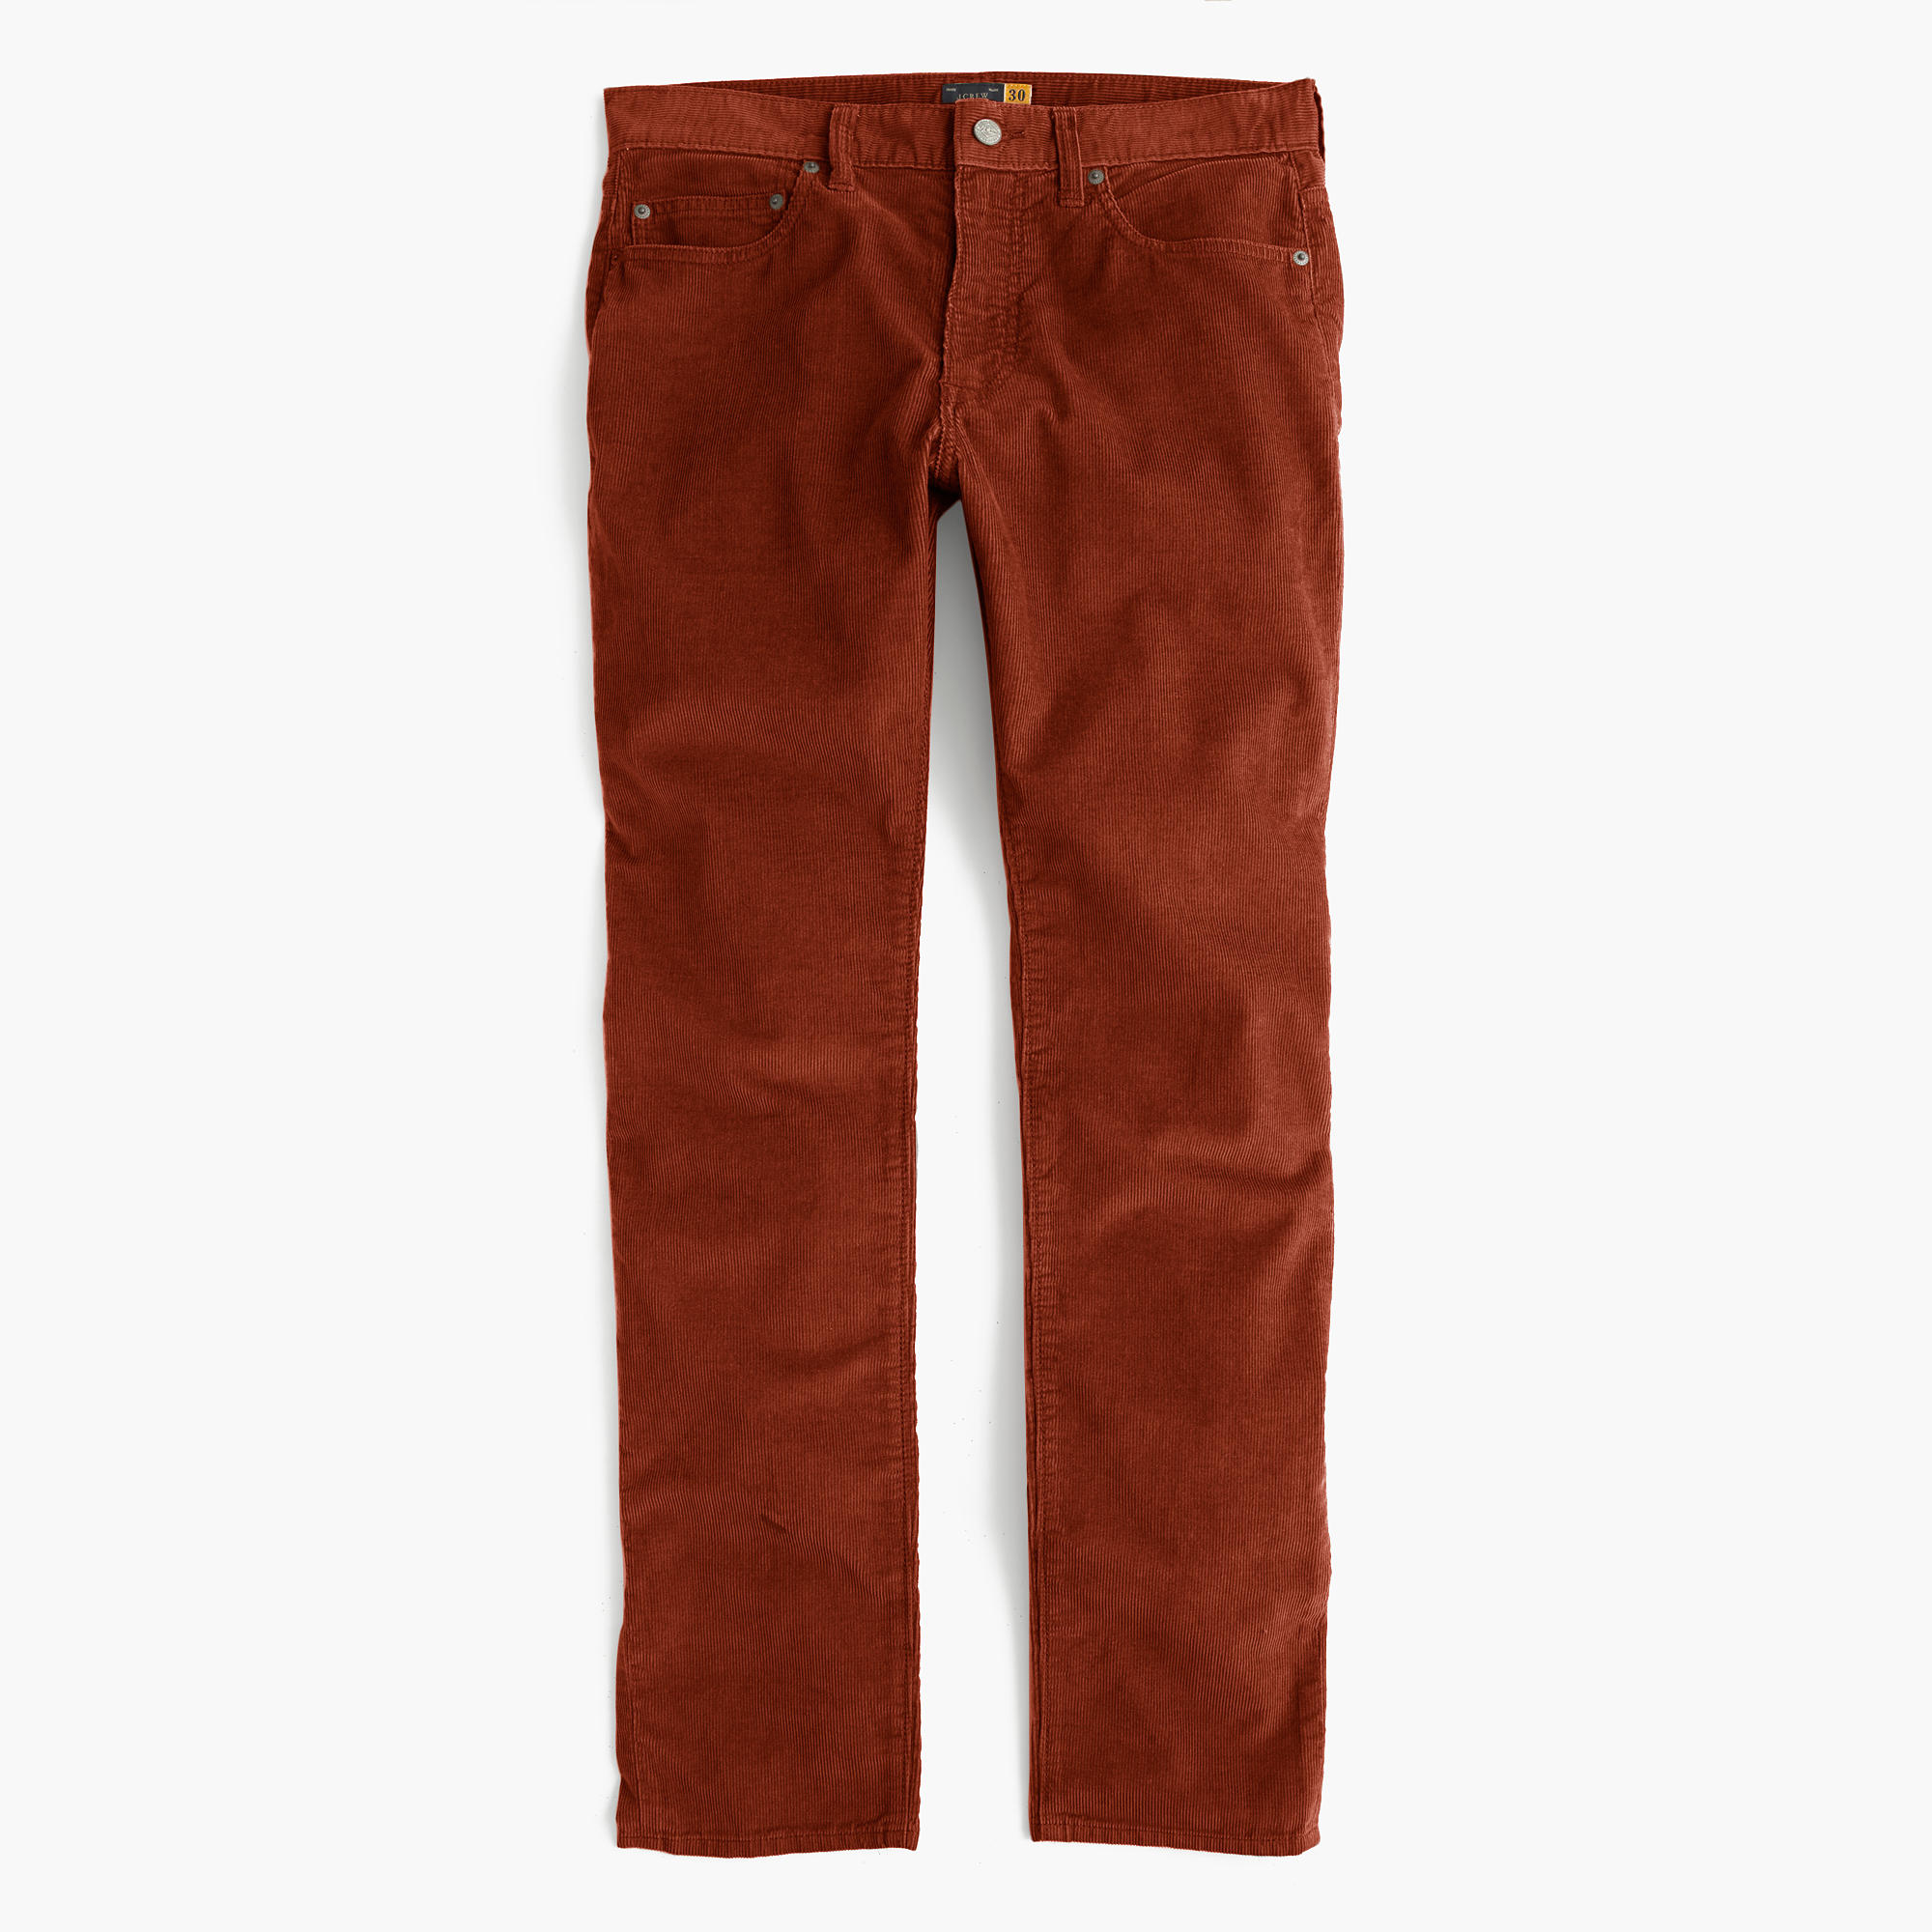 Vintage Cord In 770 Fit : Men's Cord Pants | J.Crew